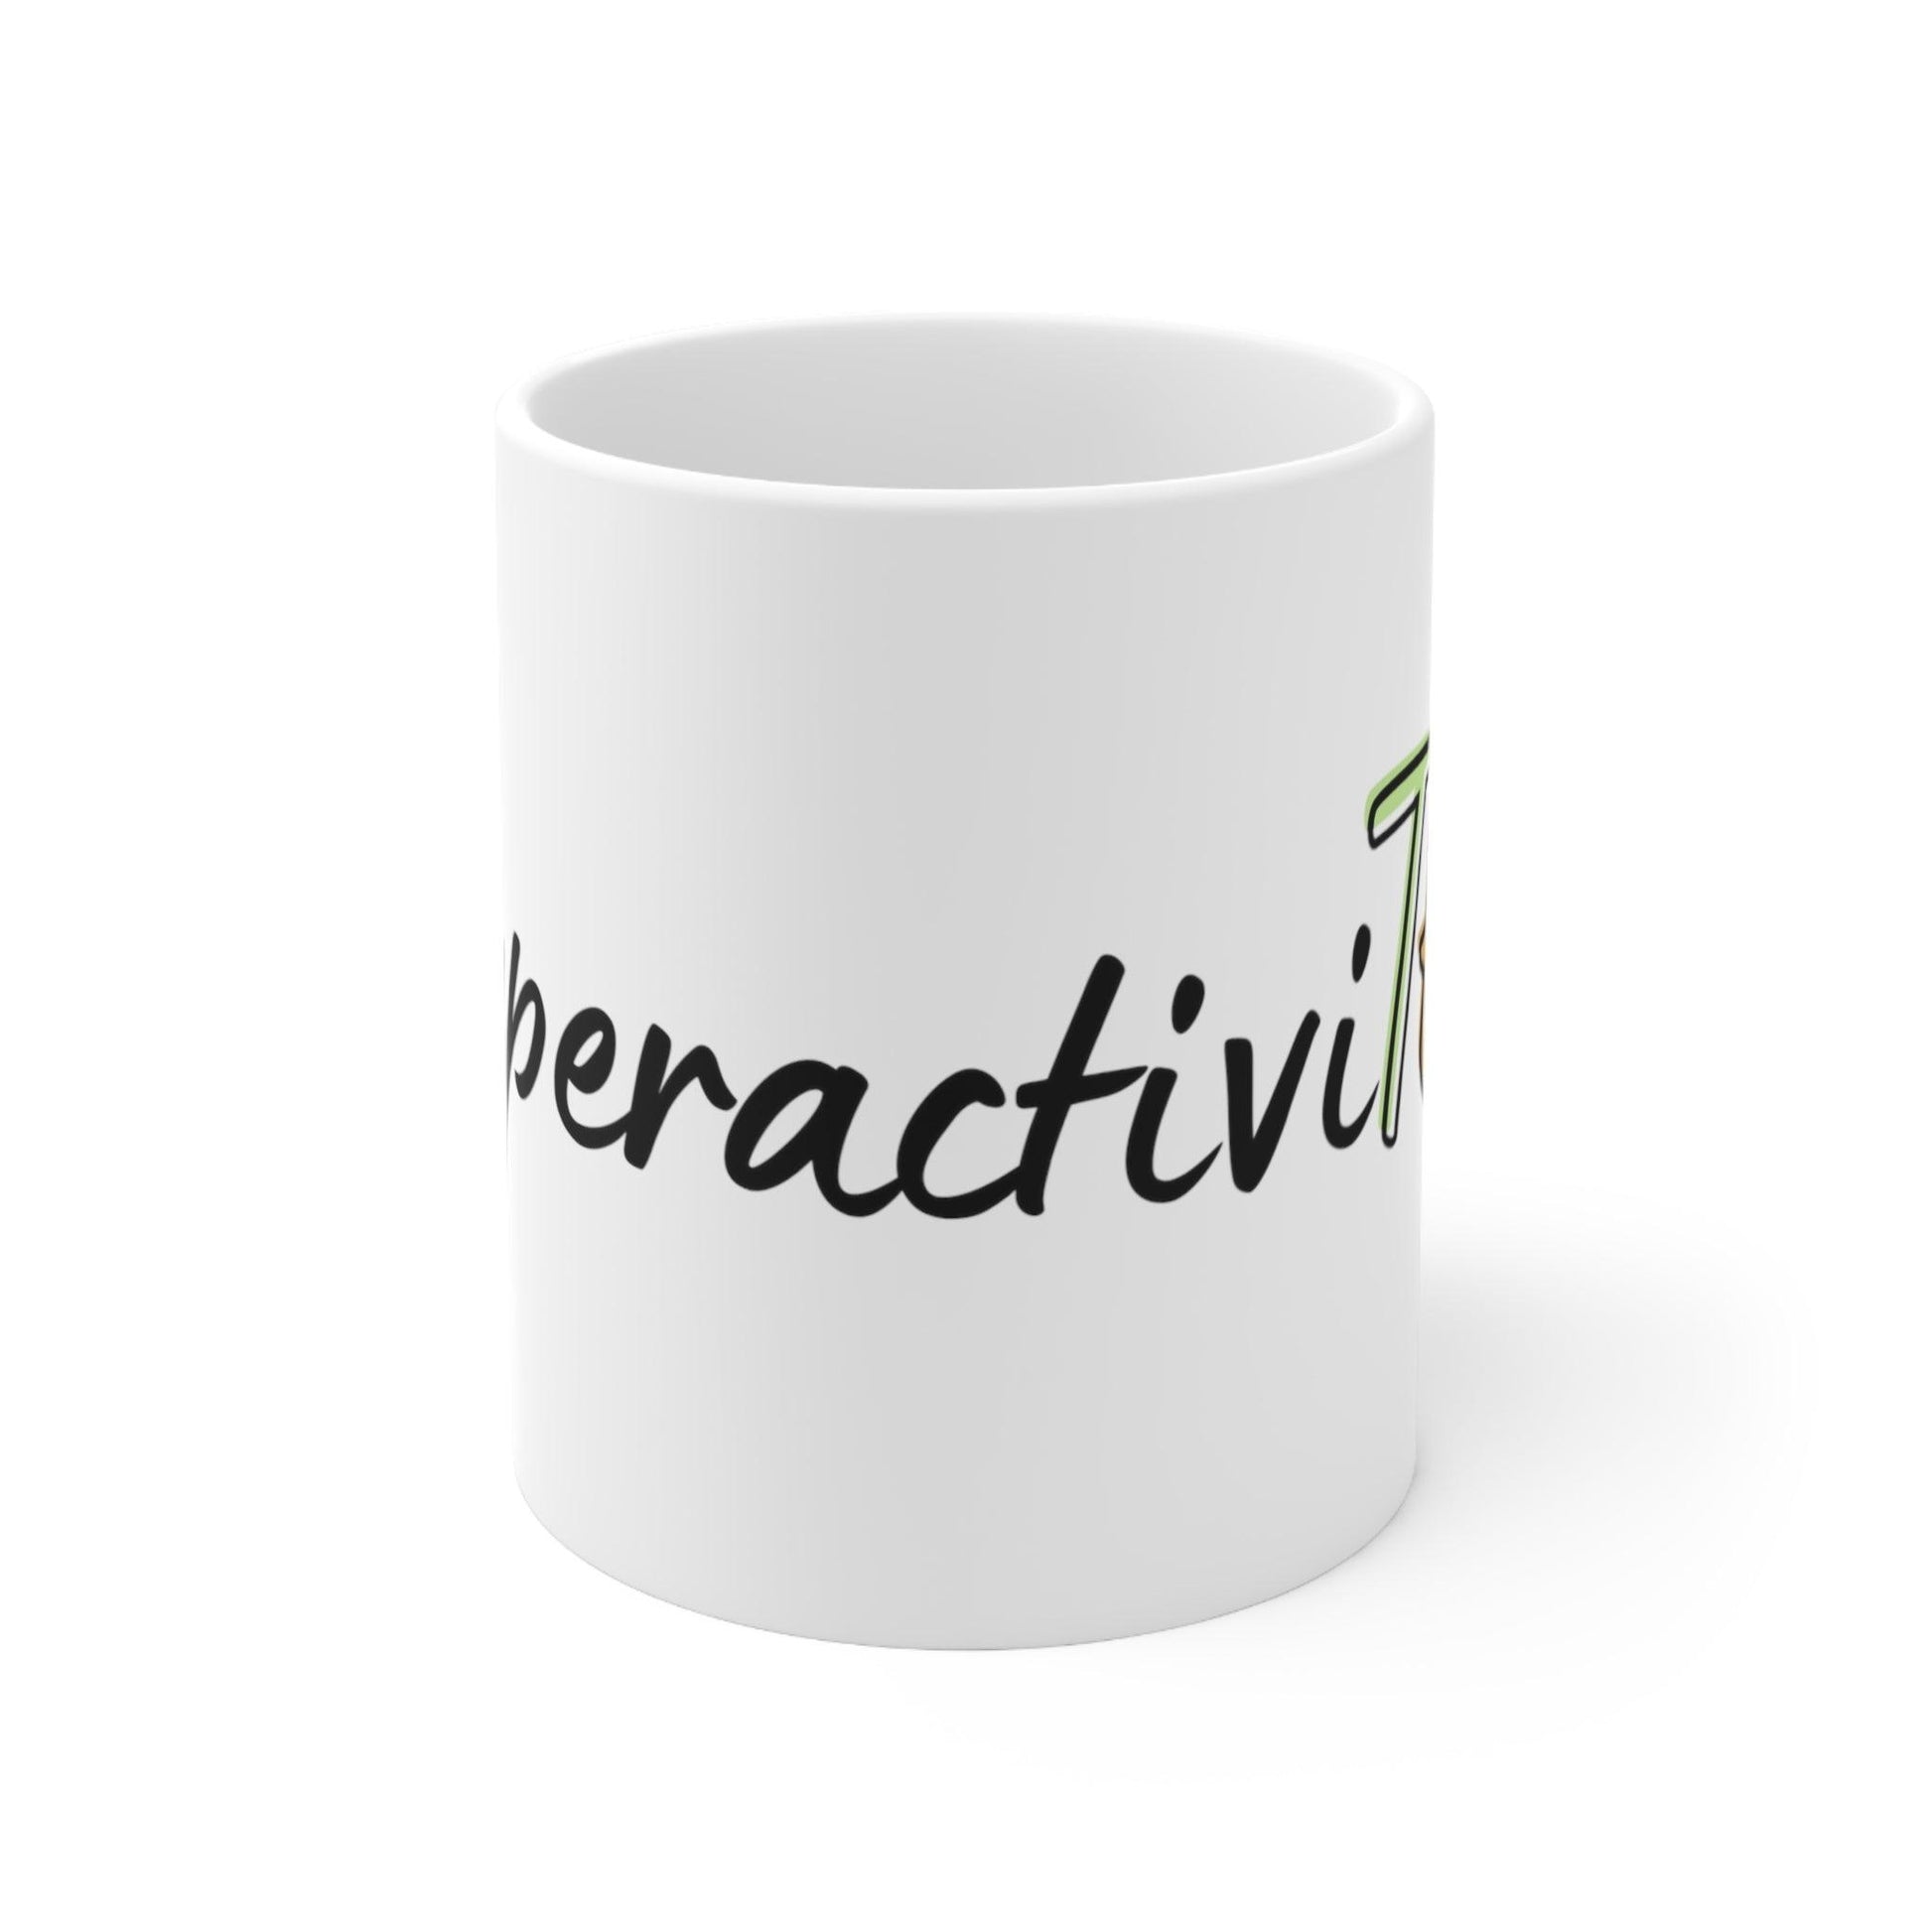 HyperactiviTEA Mug - A Serene Sip of Focus and Fun - Fidget and Focus